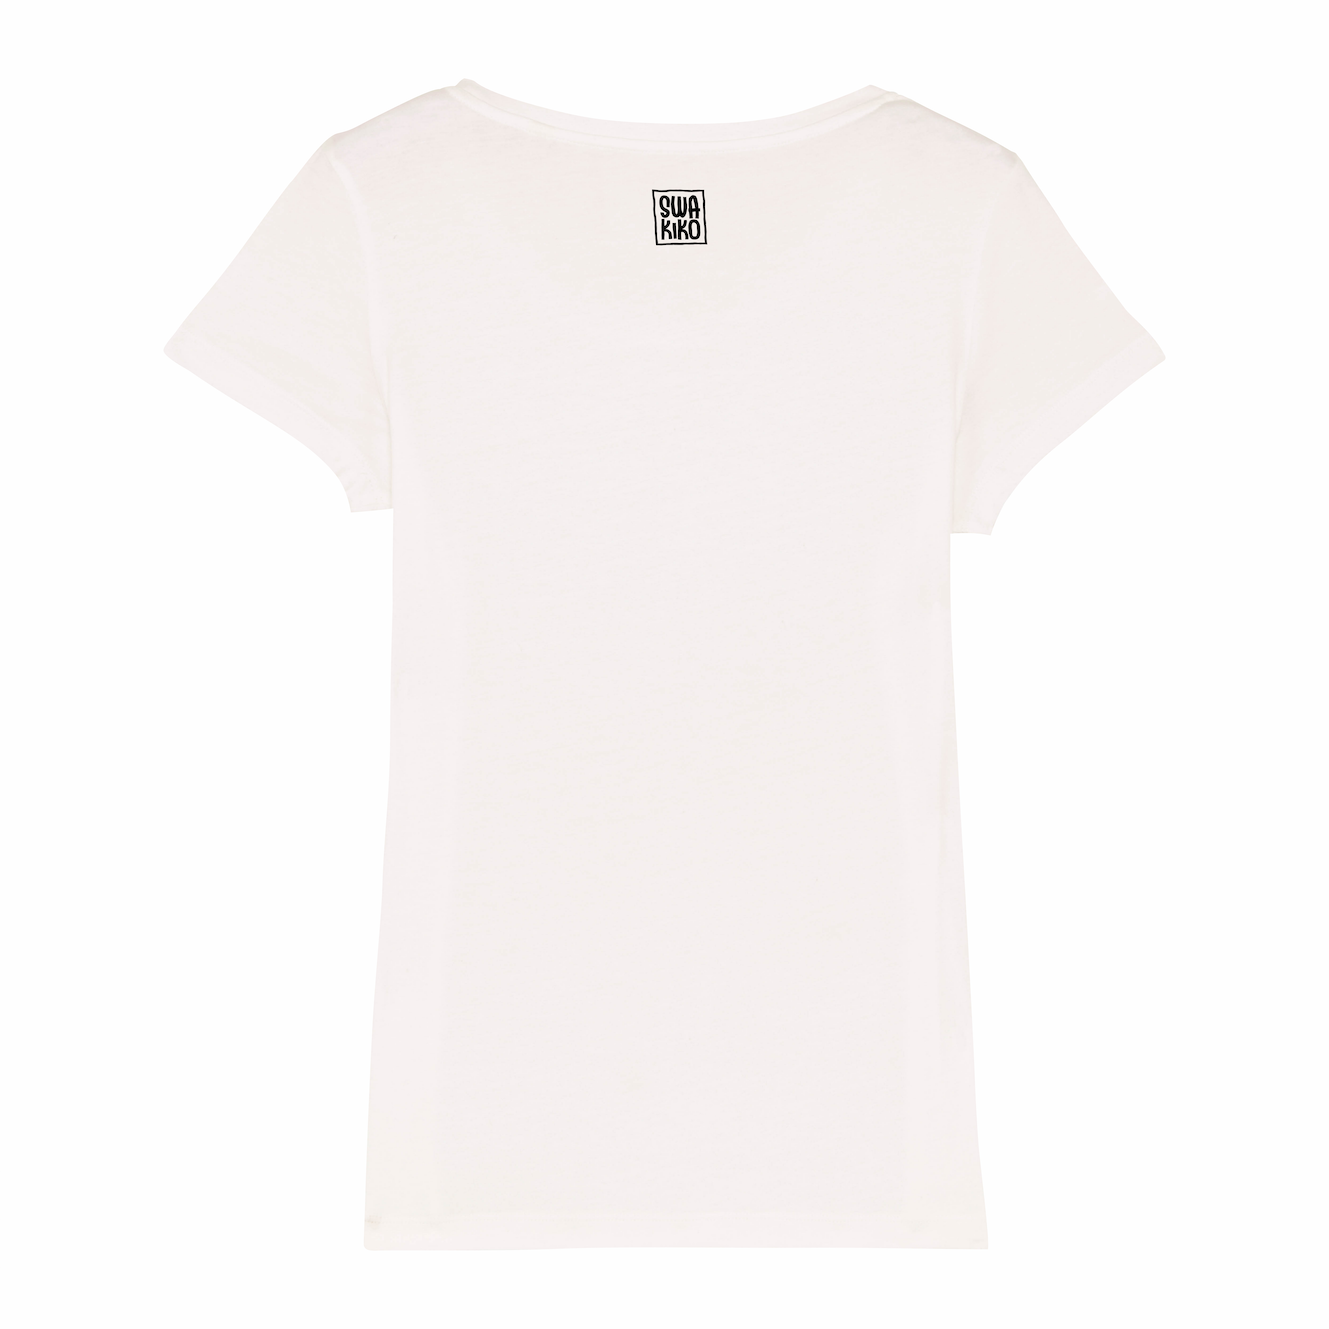 Logo SWAKIKO, Amsterdam t-shirt women white